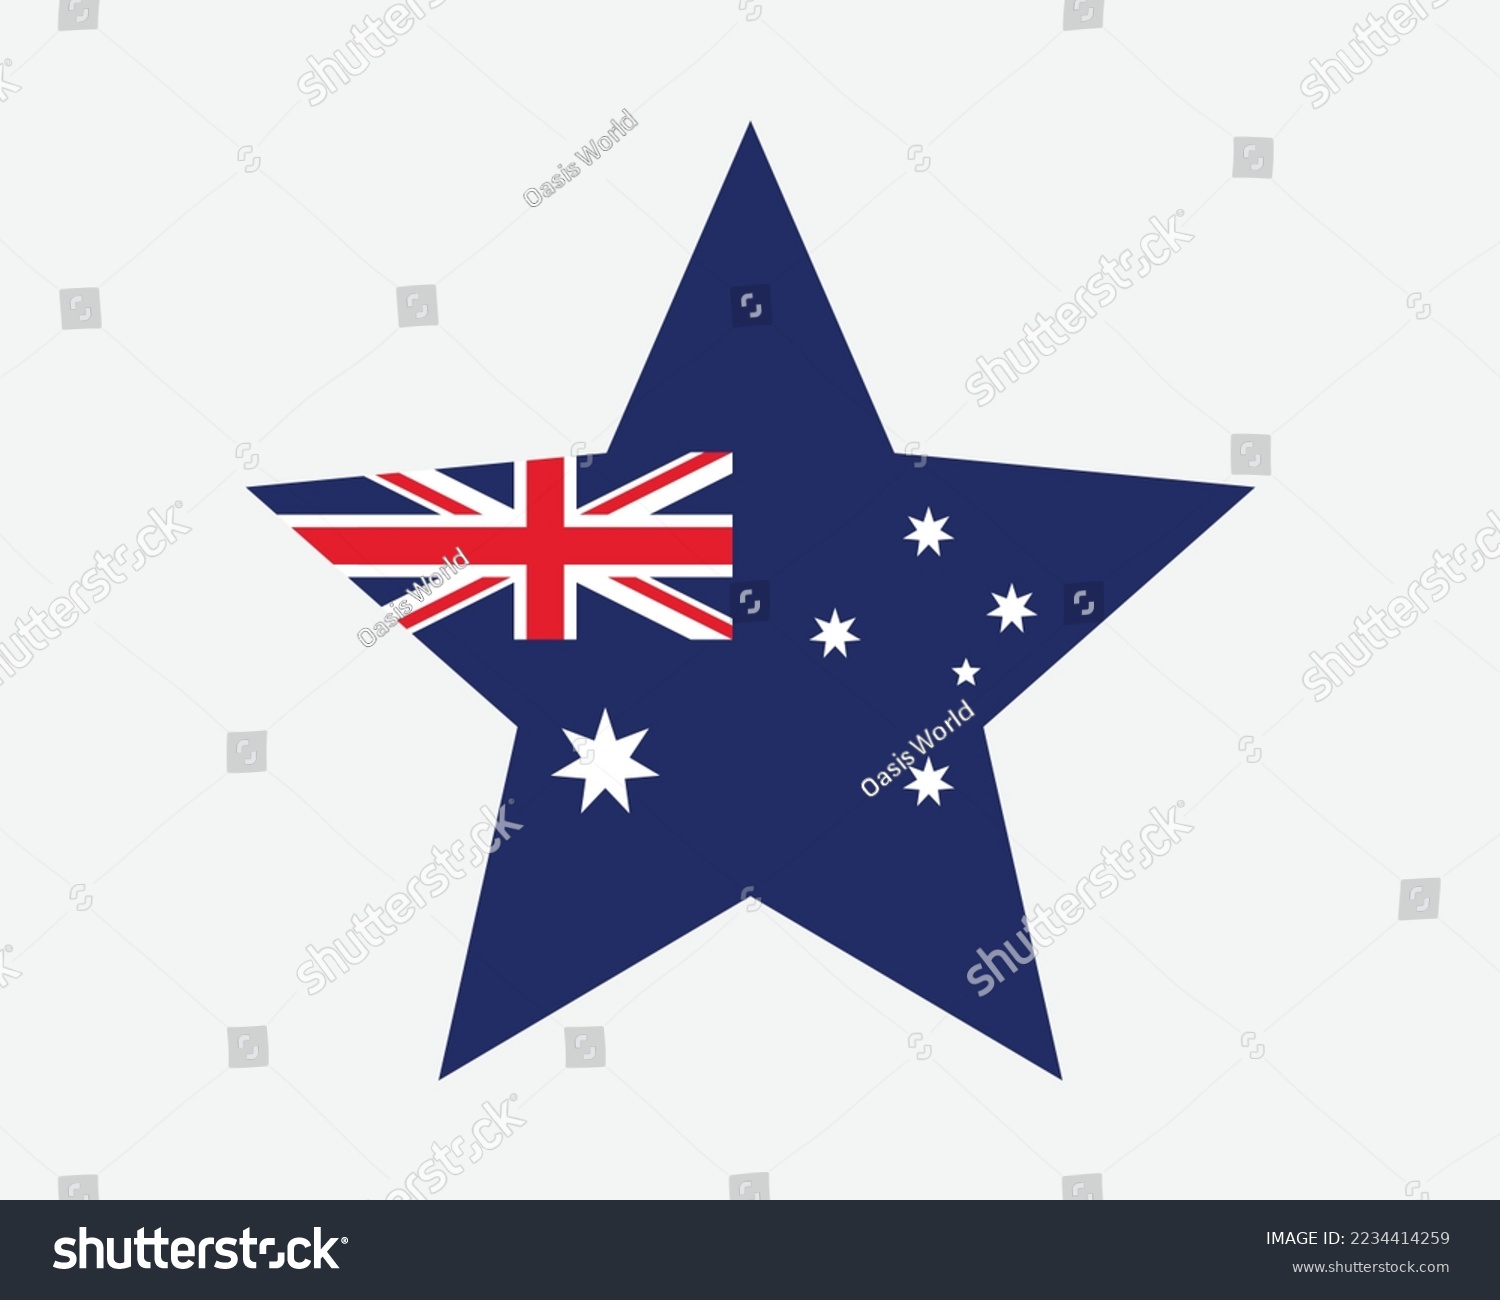 SVG of Australia Star Flag. Australian Star Shape Flag. Aussie AUS Country National Banner Icon Symbol Vector 2D Flat Artwork Graphic Illustration svg